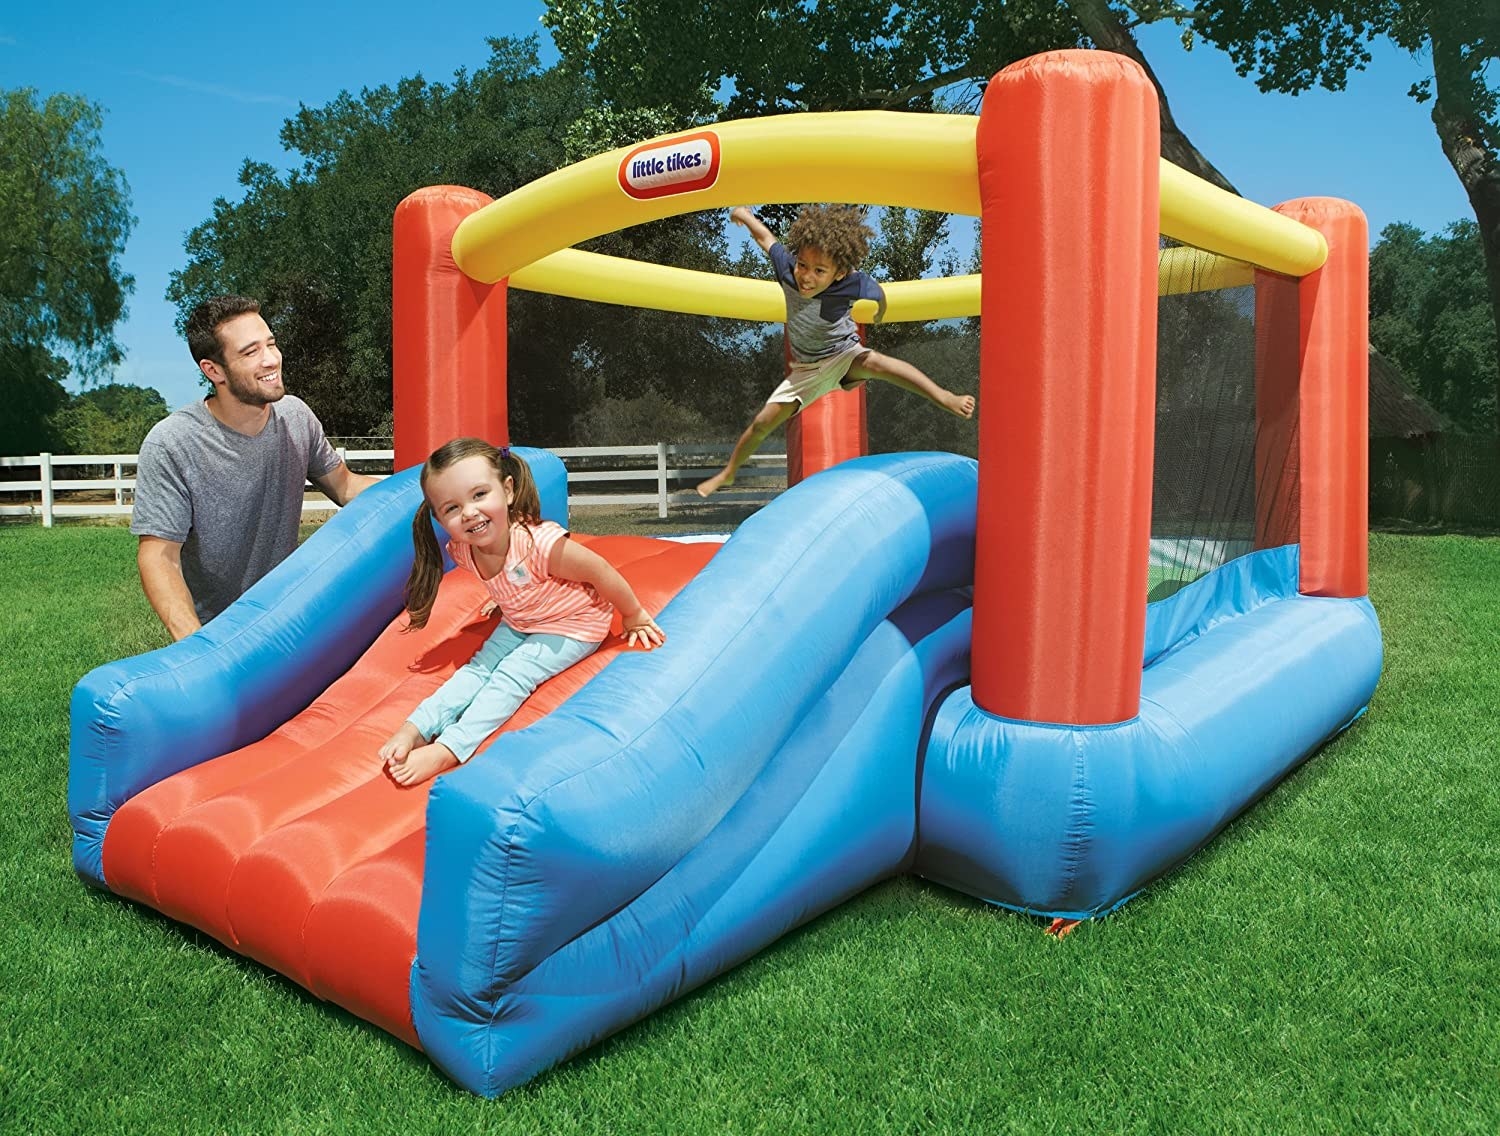 kids play on bouncy slide outdoors